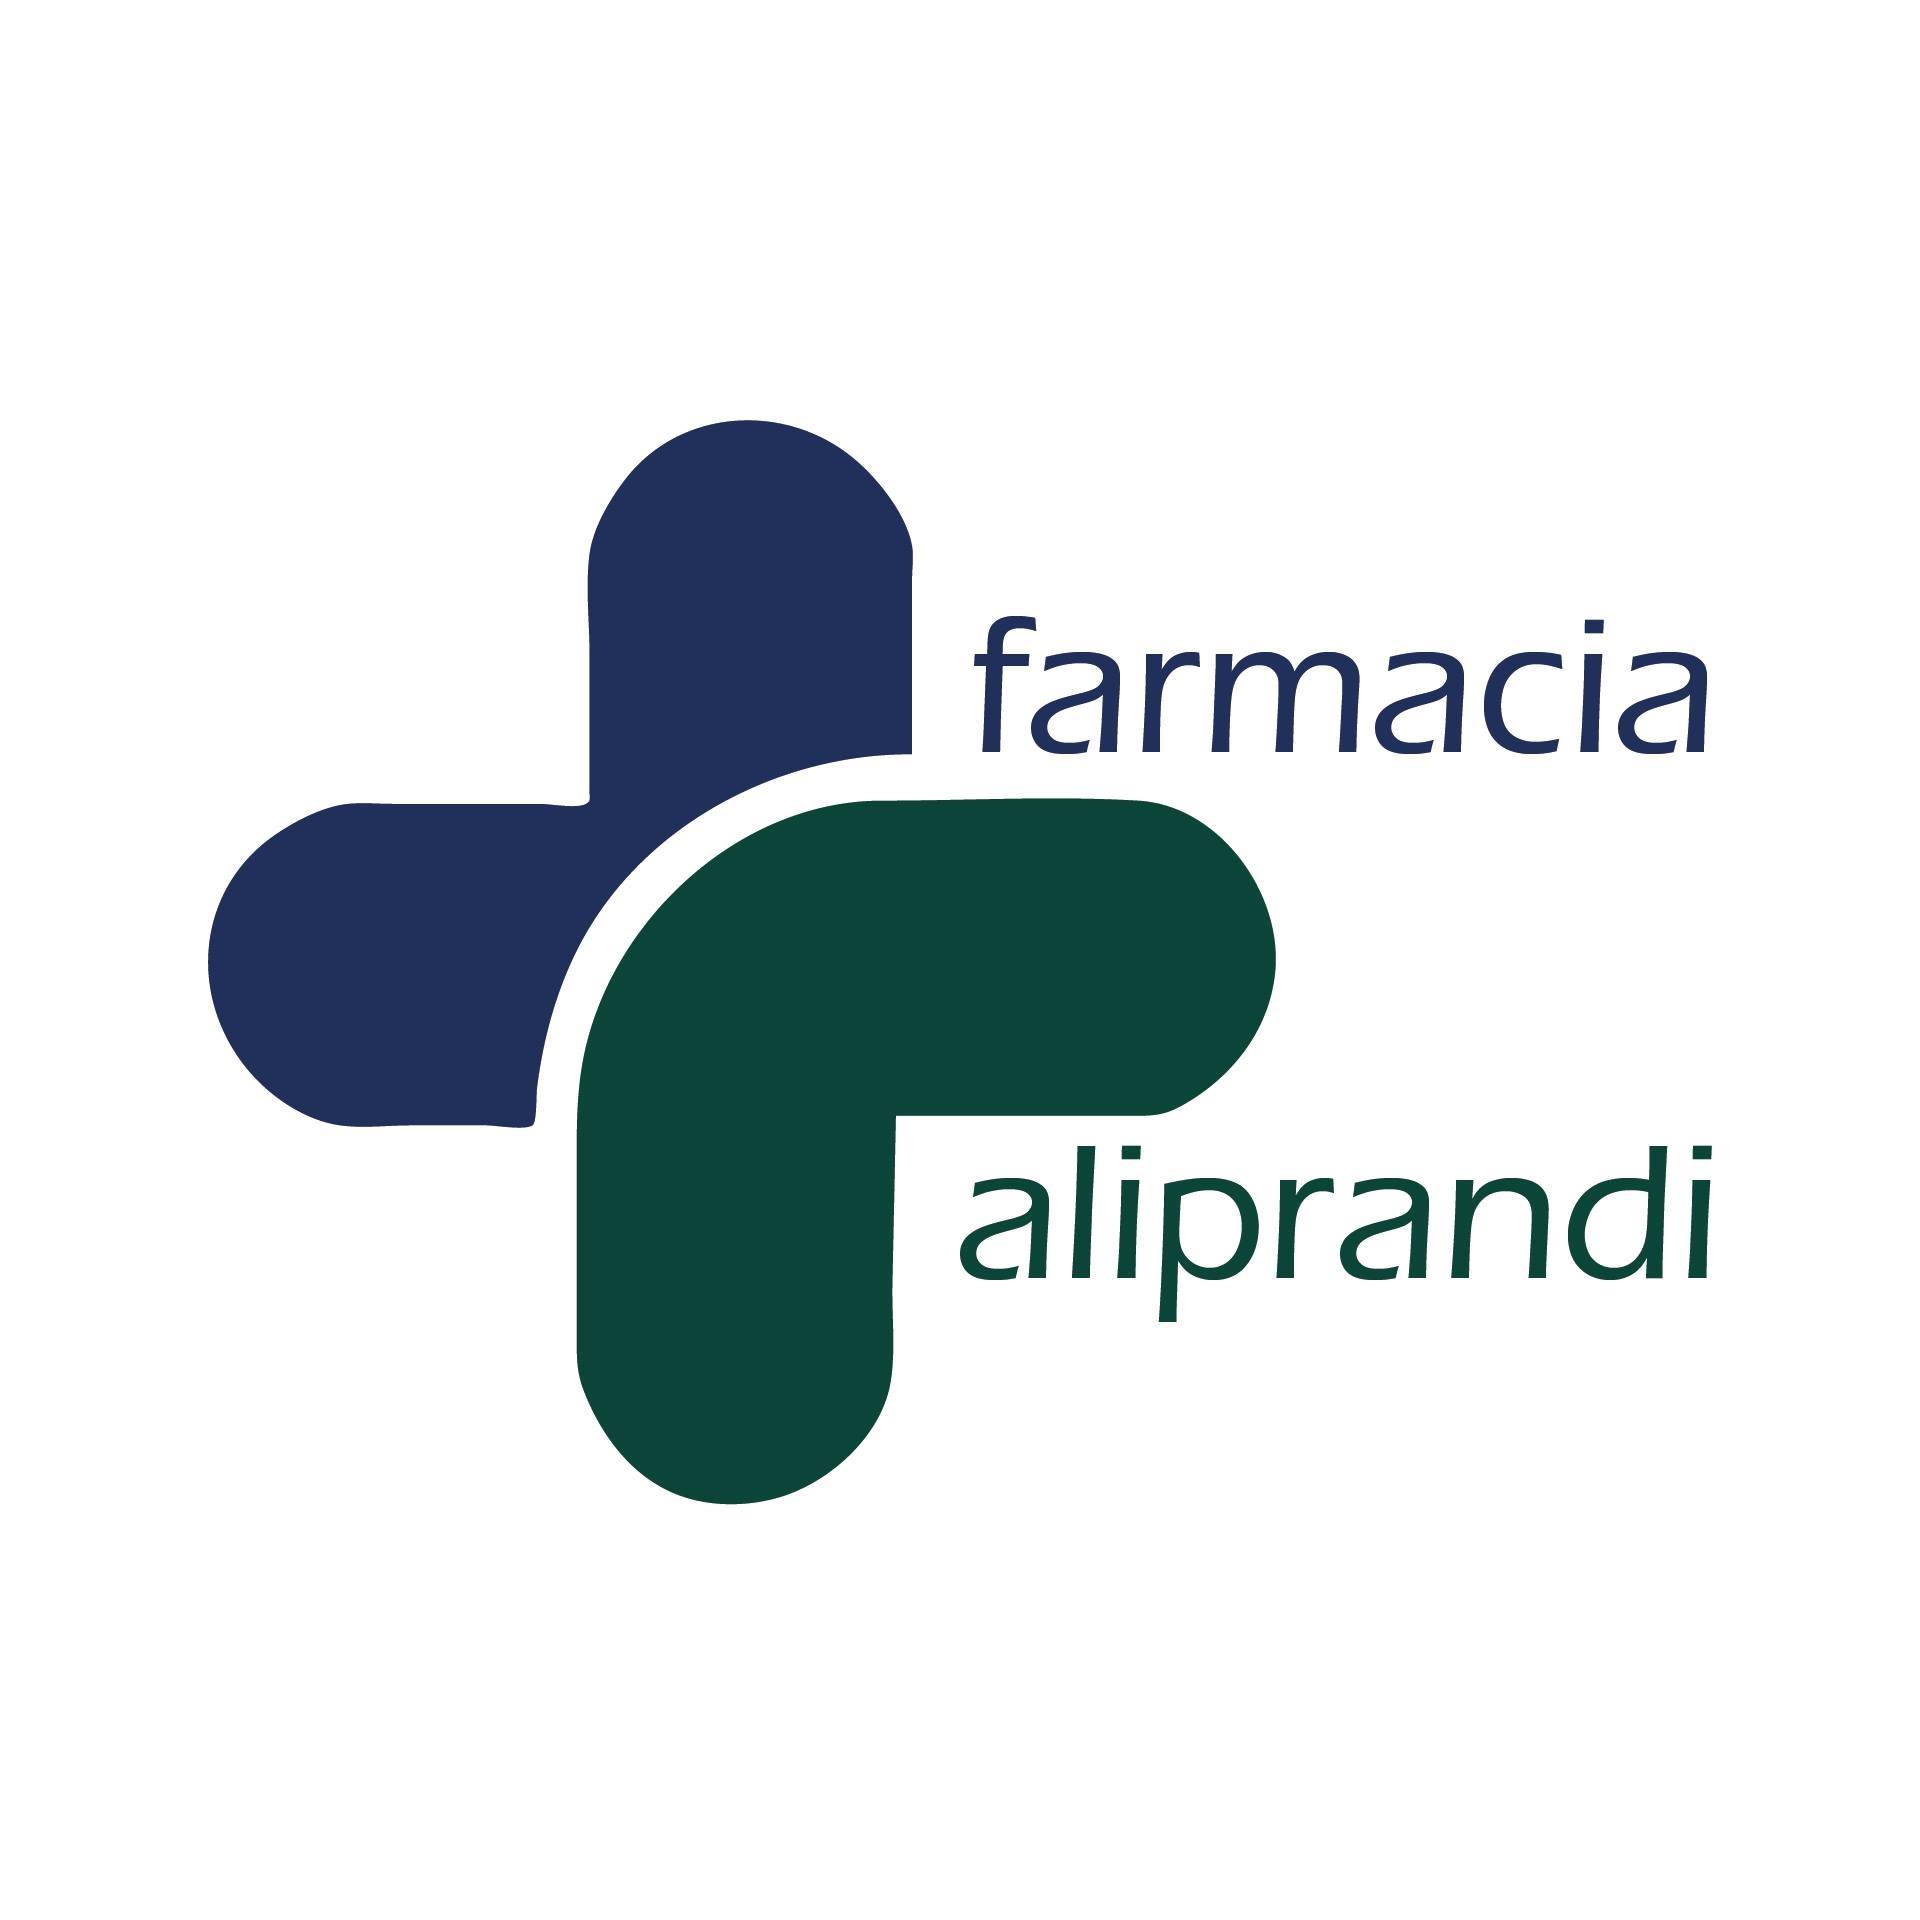 Farmacia Aliprandi | Portogruaro.org